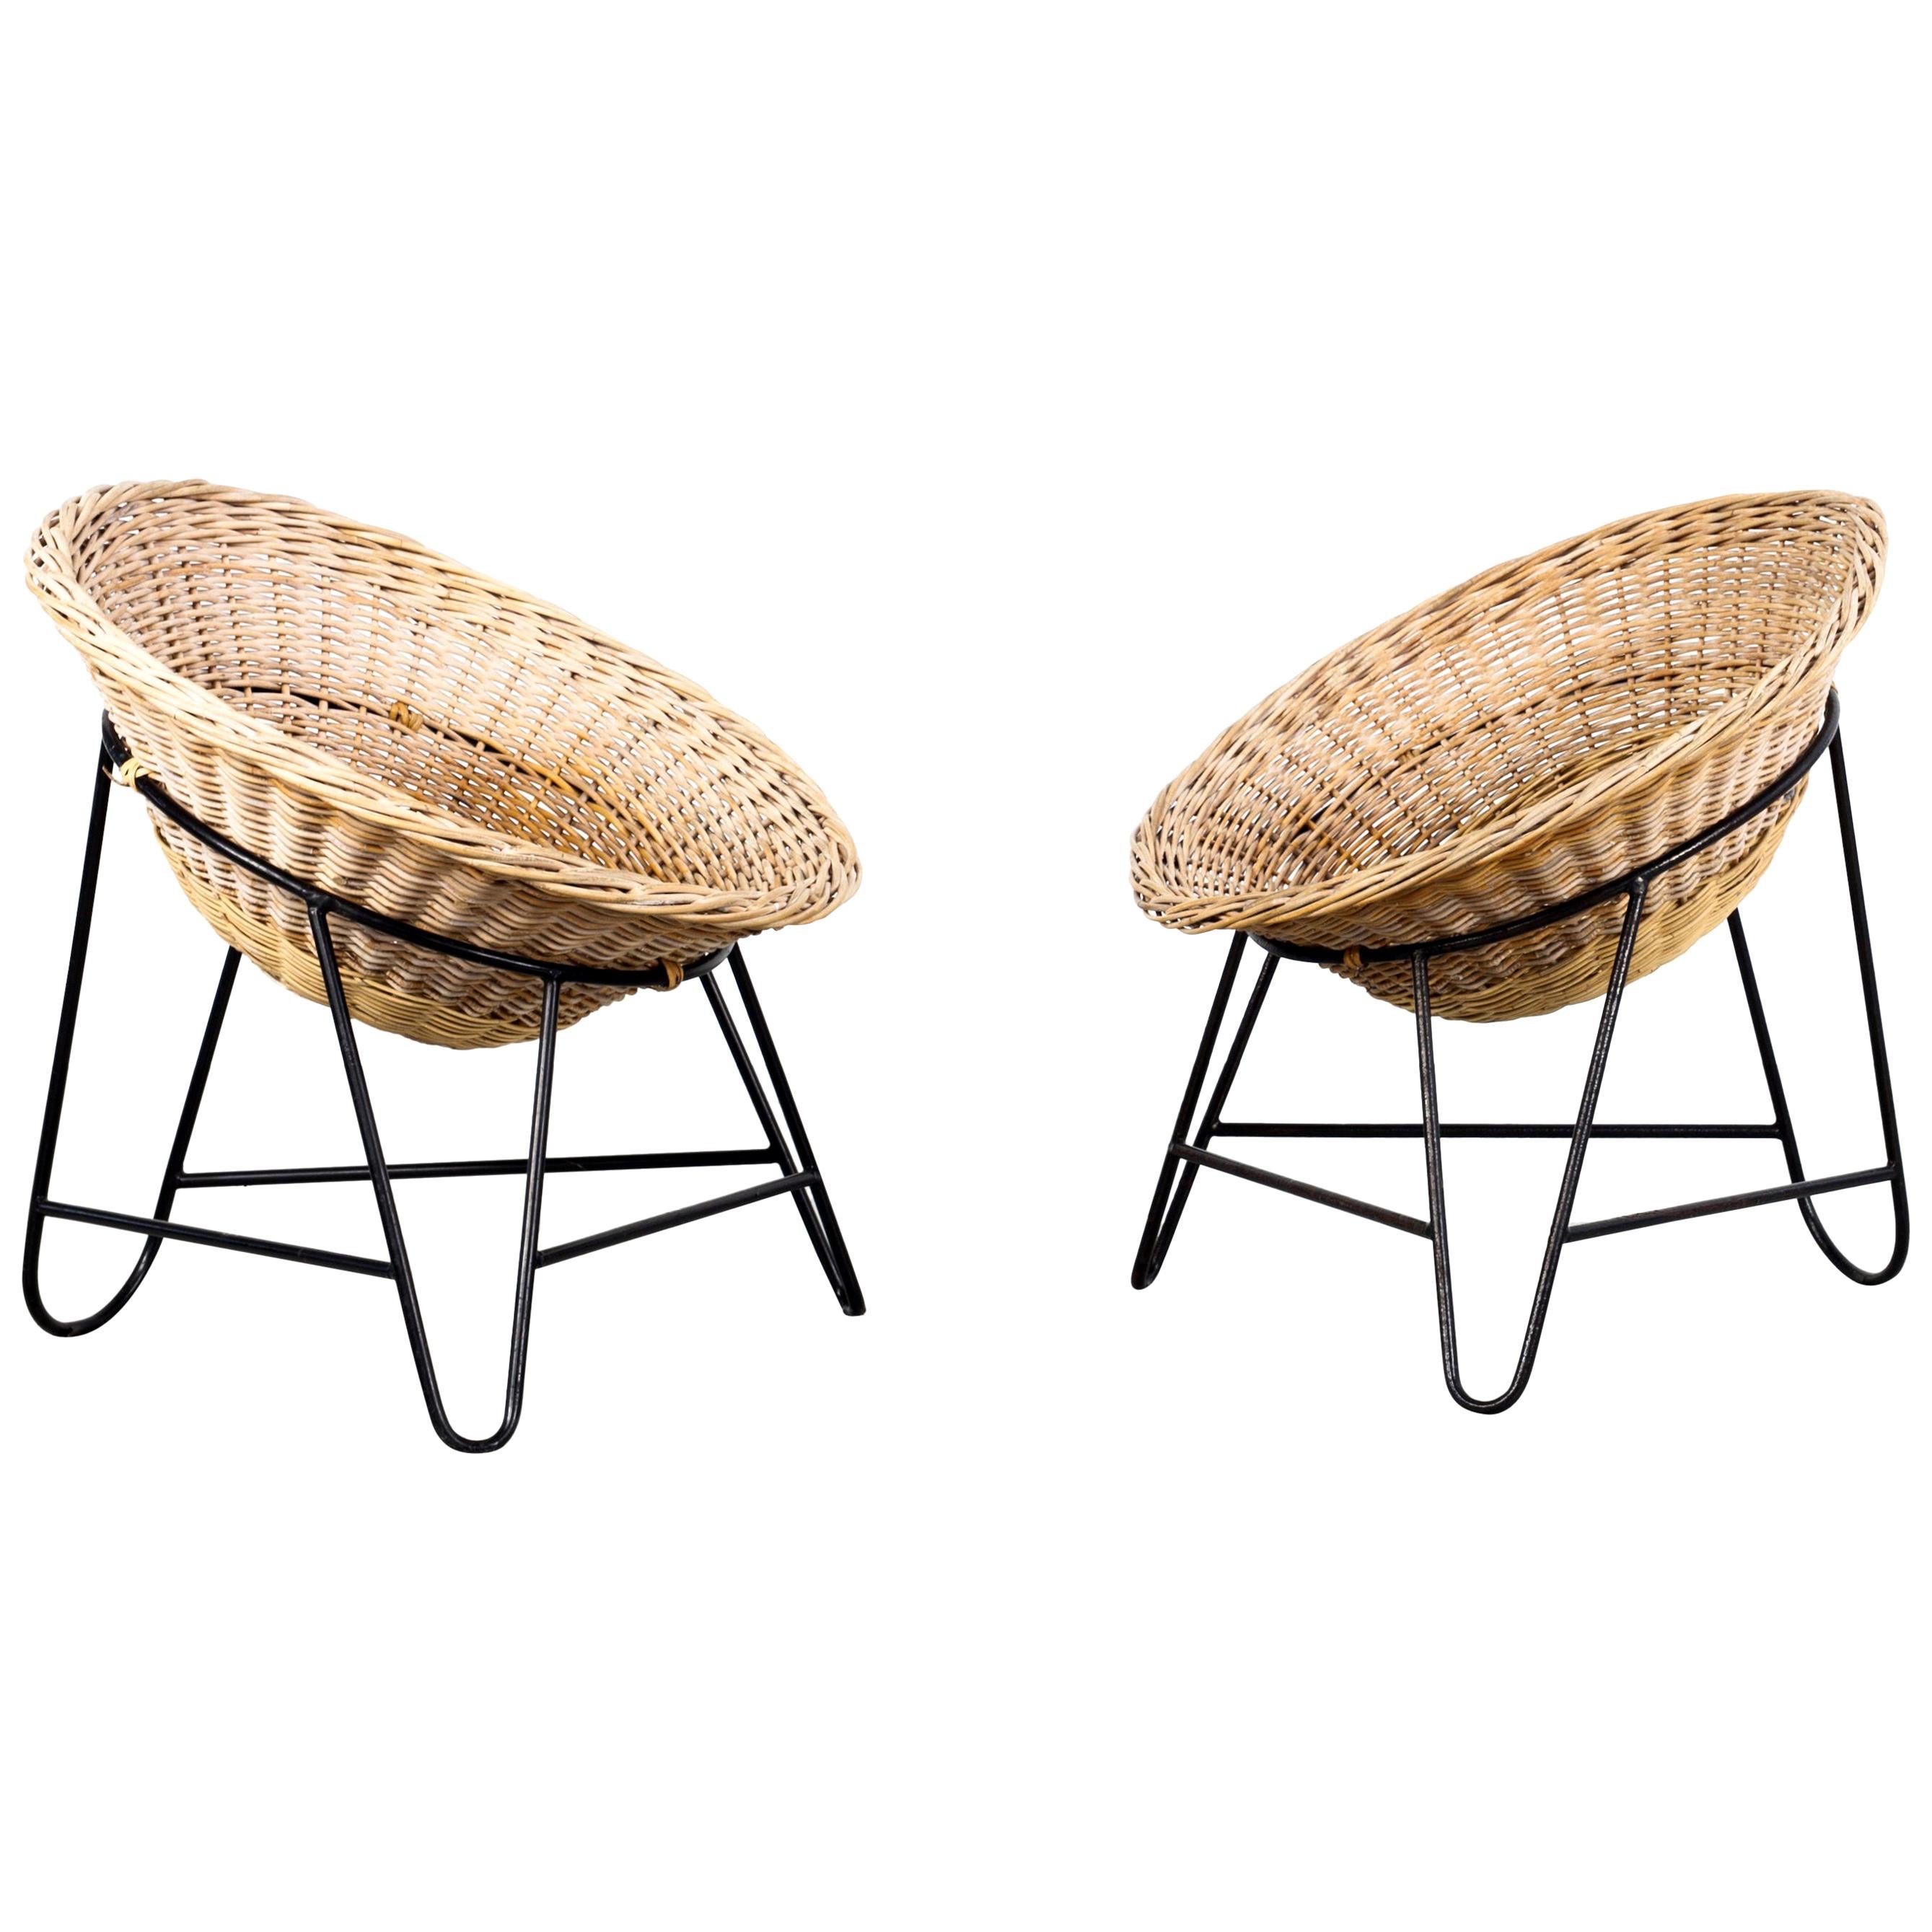 Italian Mid-Century Modern light brown coconut-shaped Rattan Basket Chair, 1950